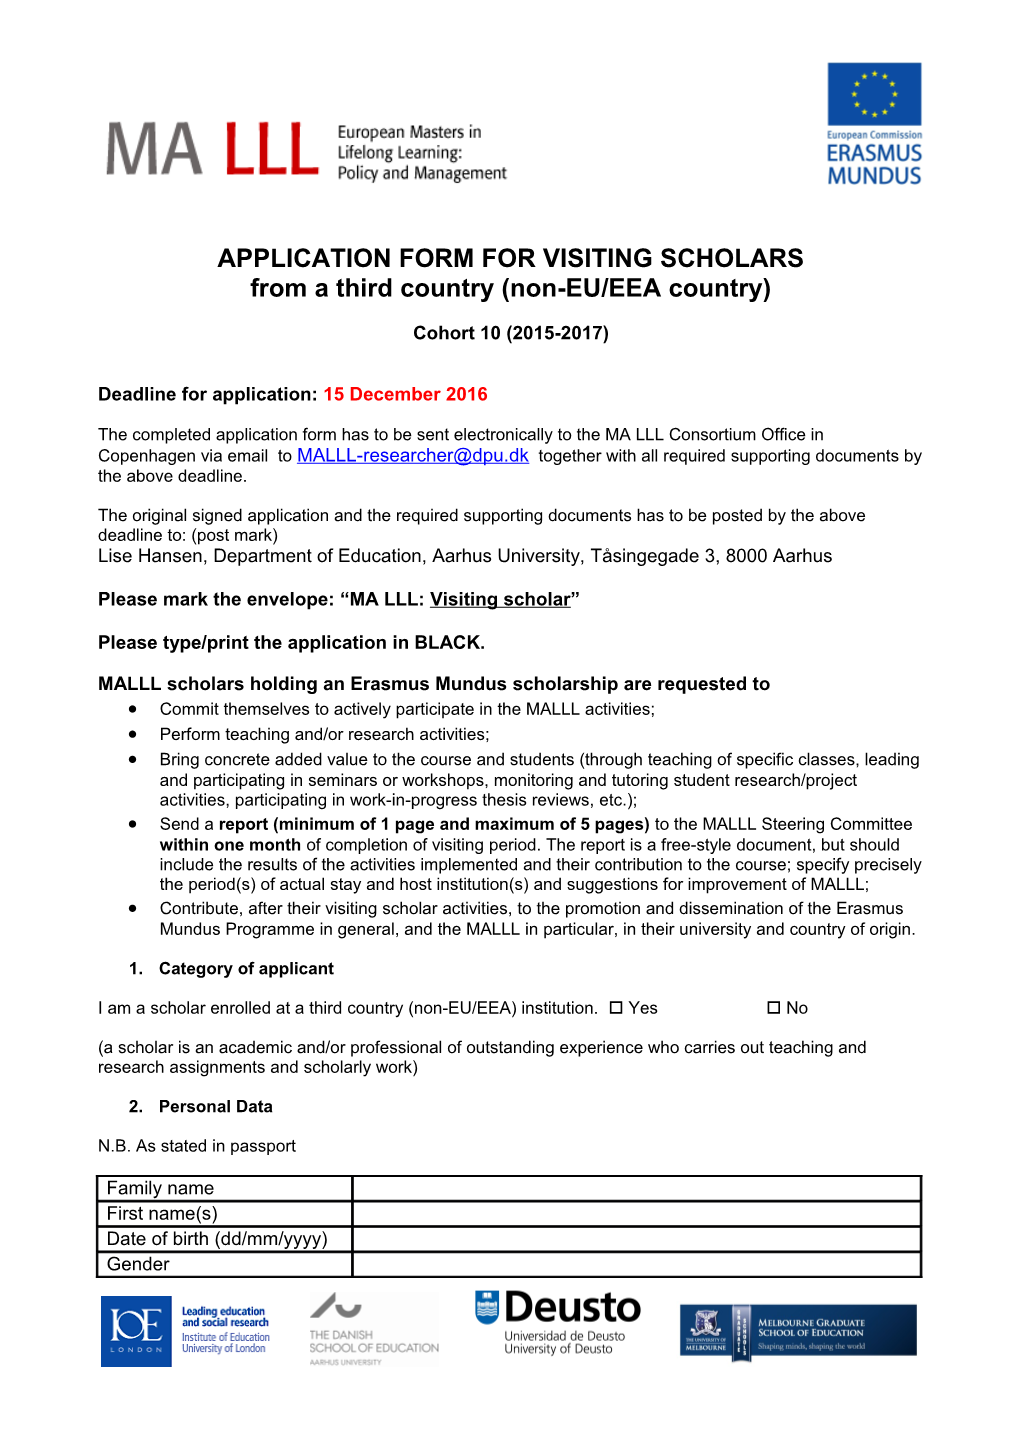 Application Form for Visiting Scholars